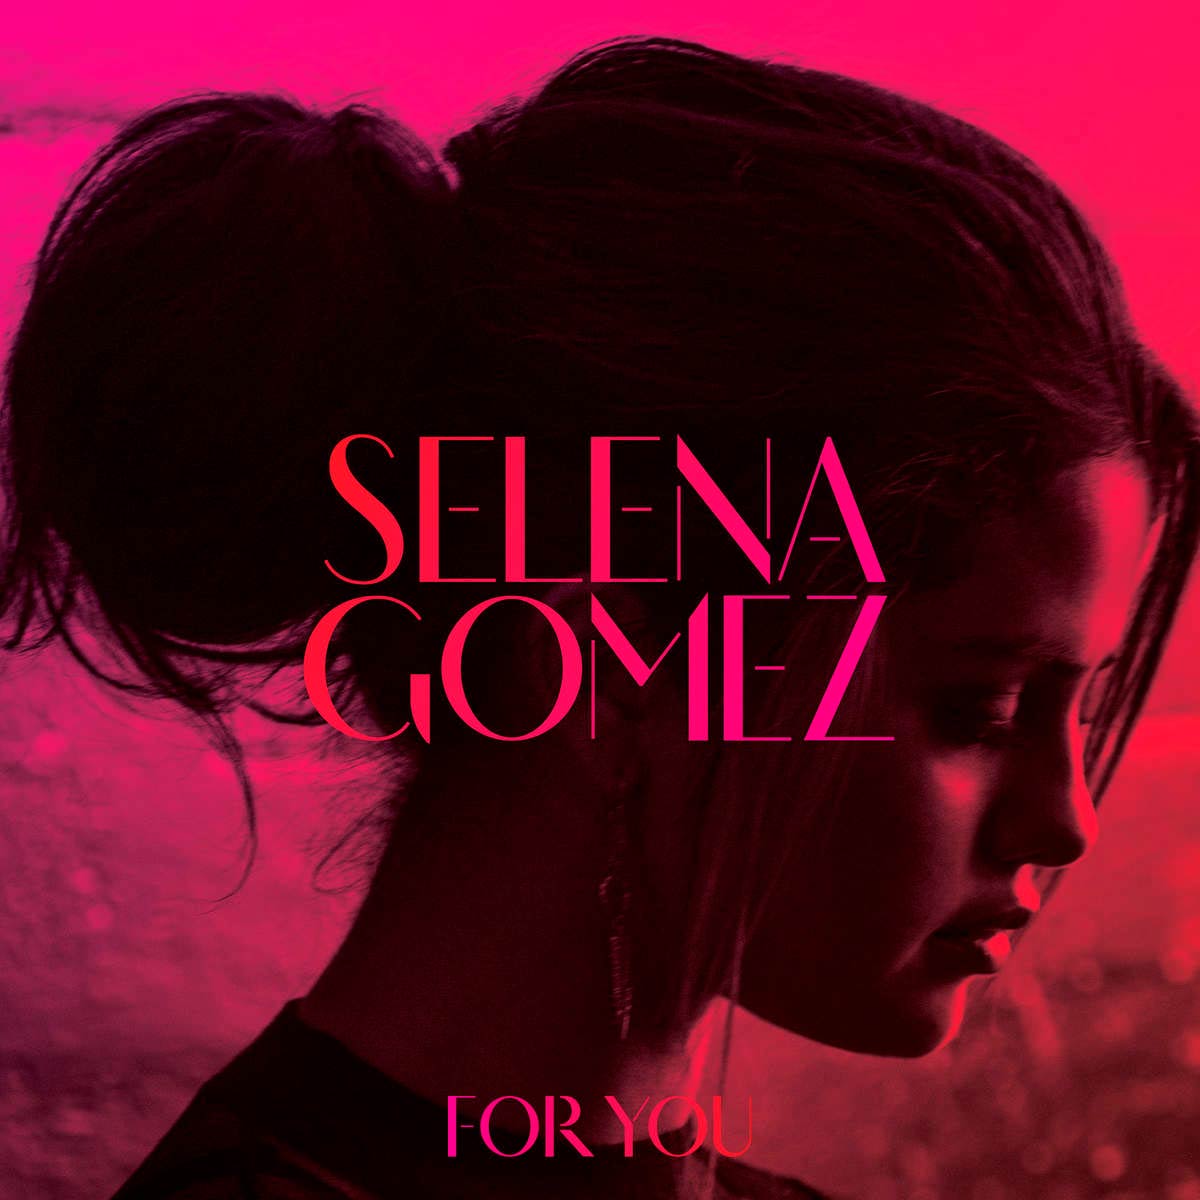 Selena Gomez: For you, la portada del disco